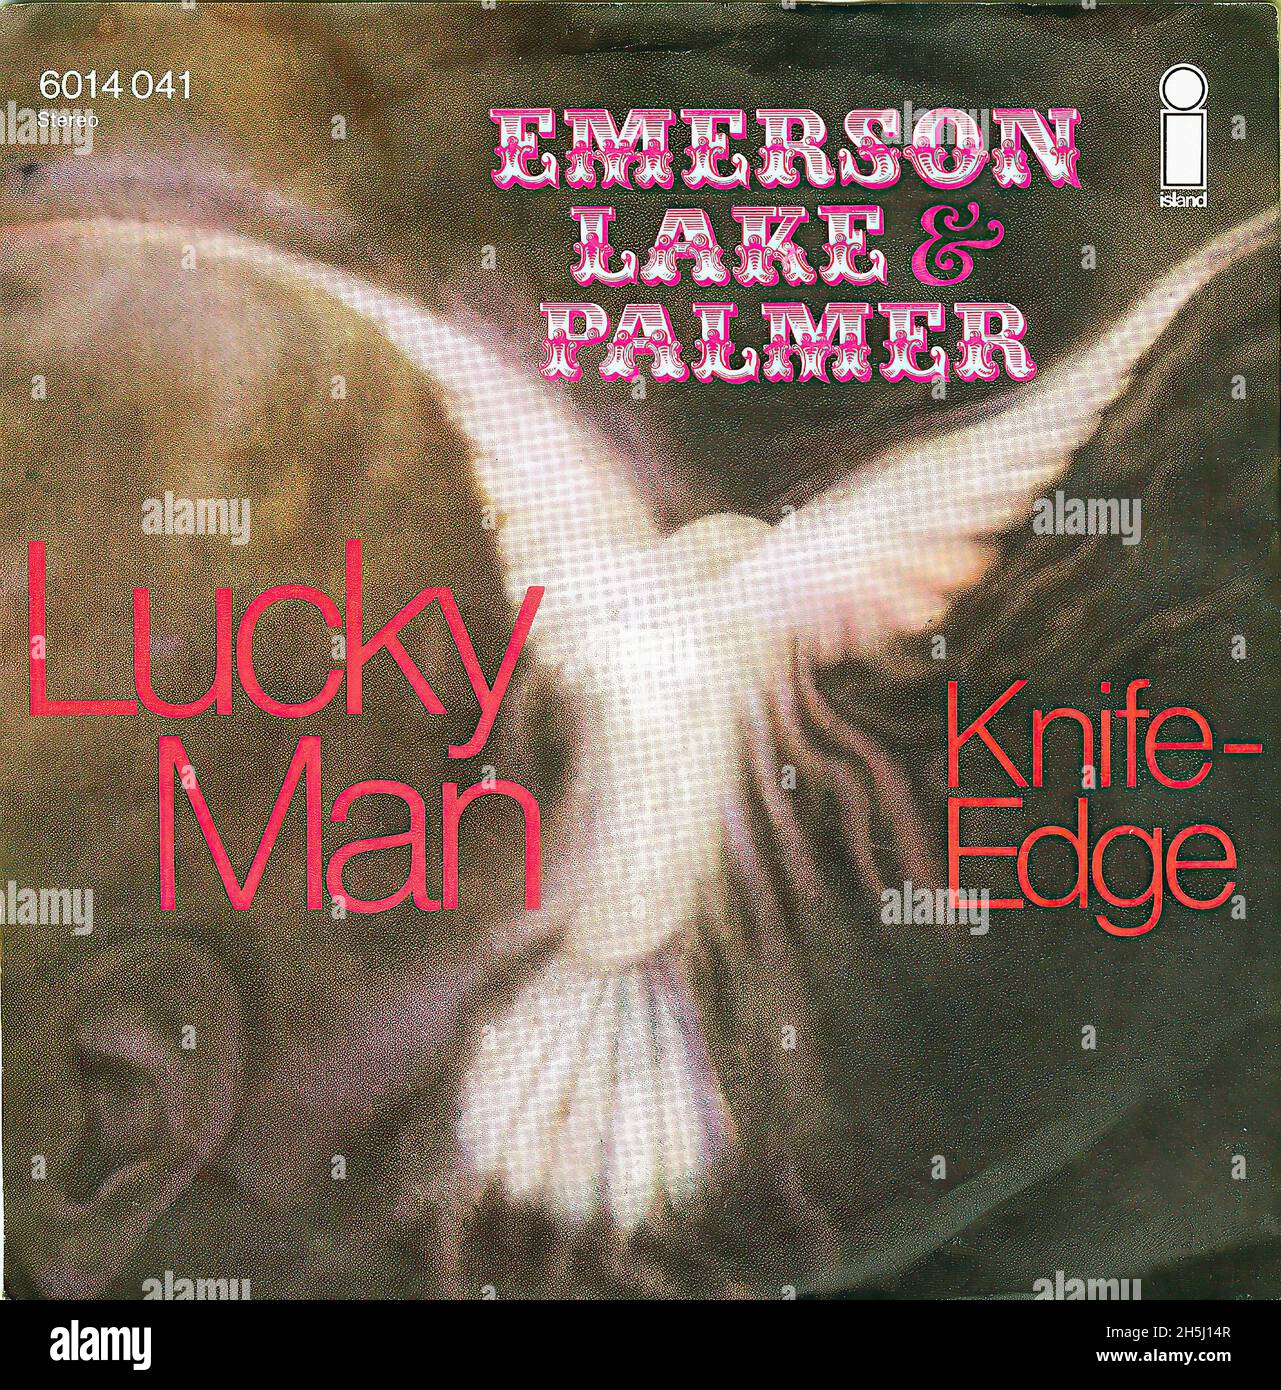 Lucky man Emerson Lake Palmer